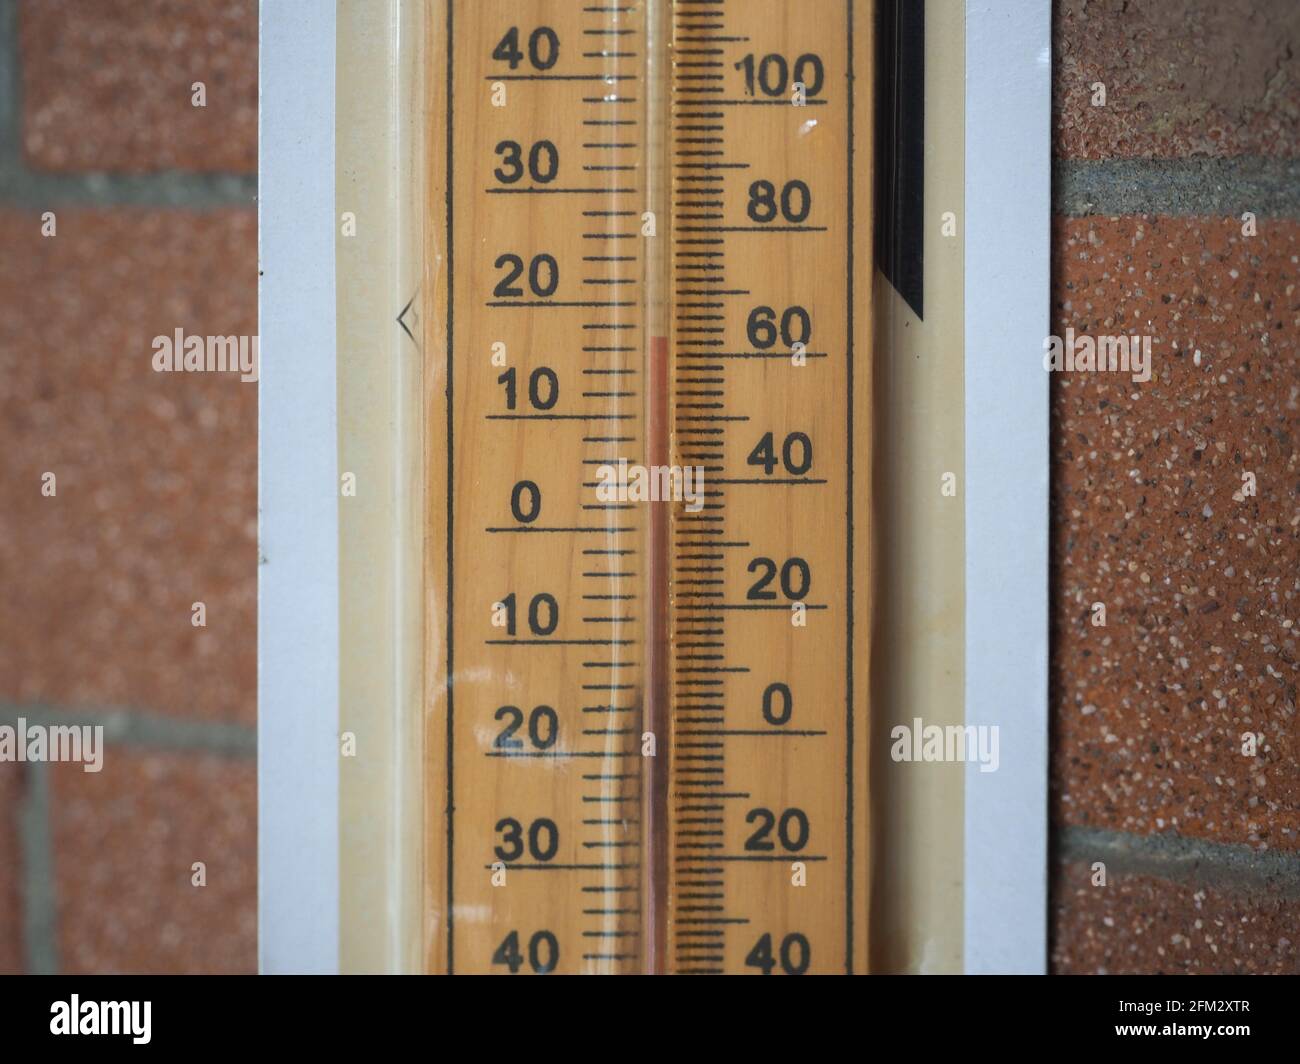 https://c8.alamy.com/comp/2FM2XTR/thermometer-thermostat-instrument-to-measure-air-temperature-2FM2XTR.jpg